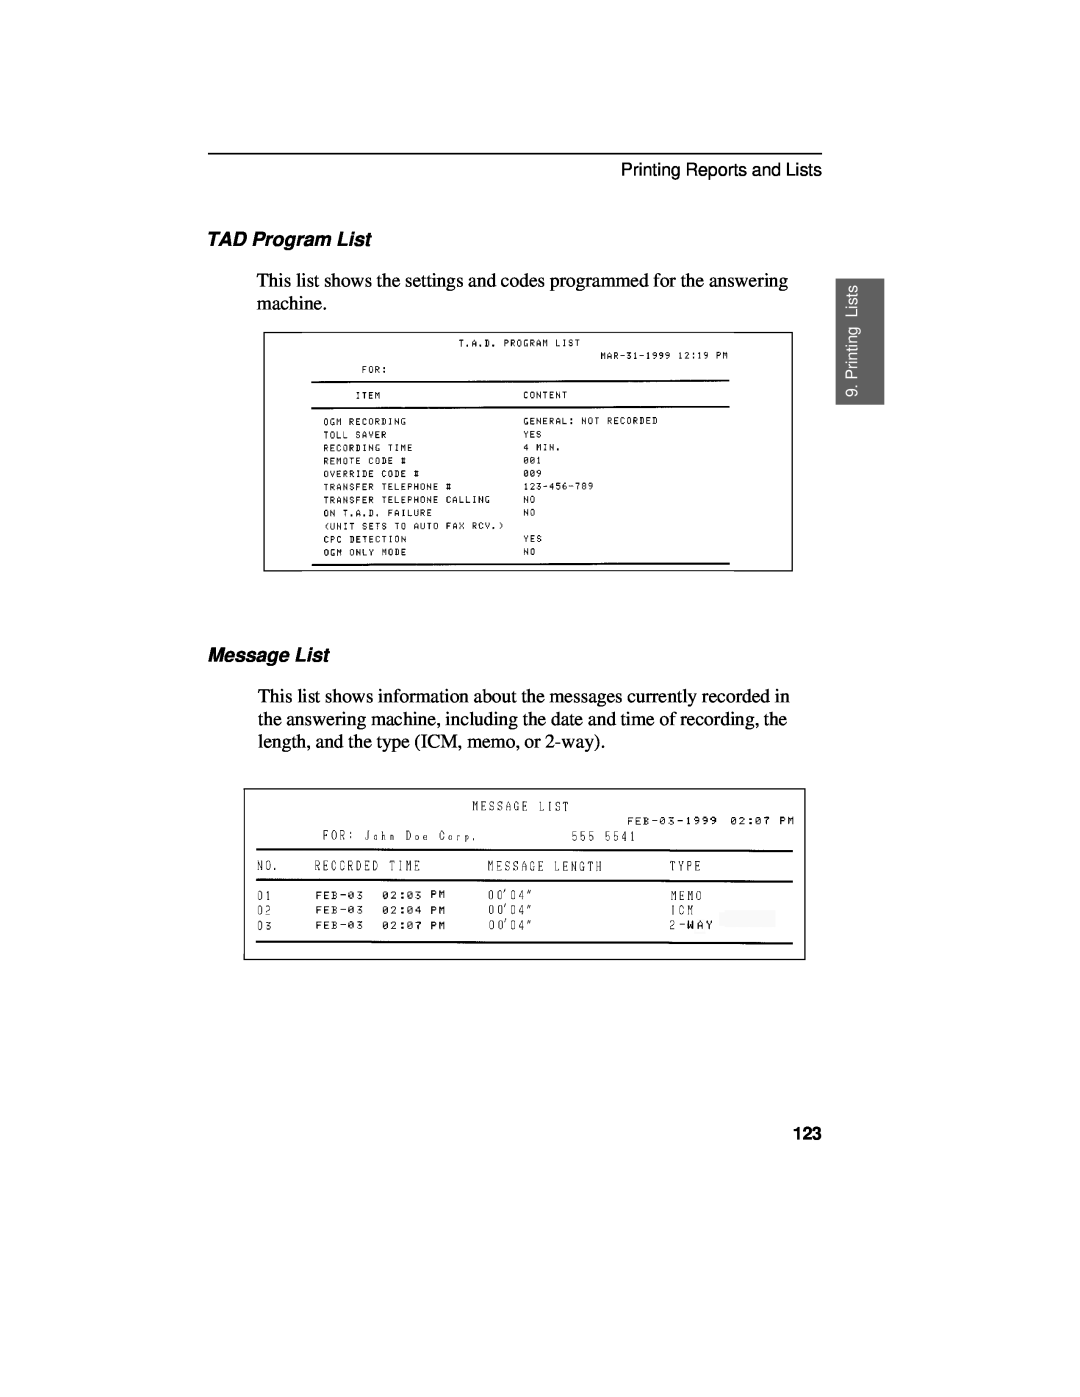 Sharp UX-460 operation manual TAD Program List, Message List 